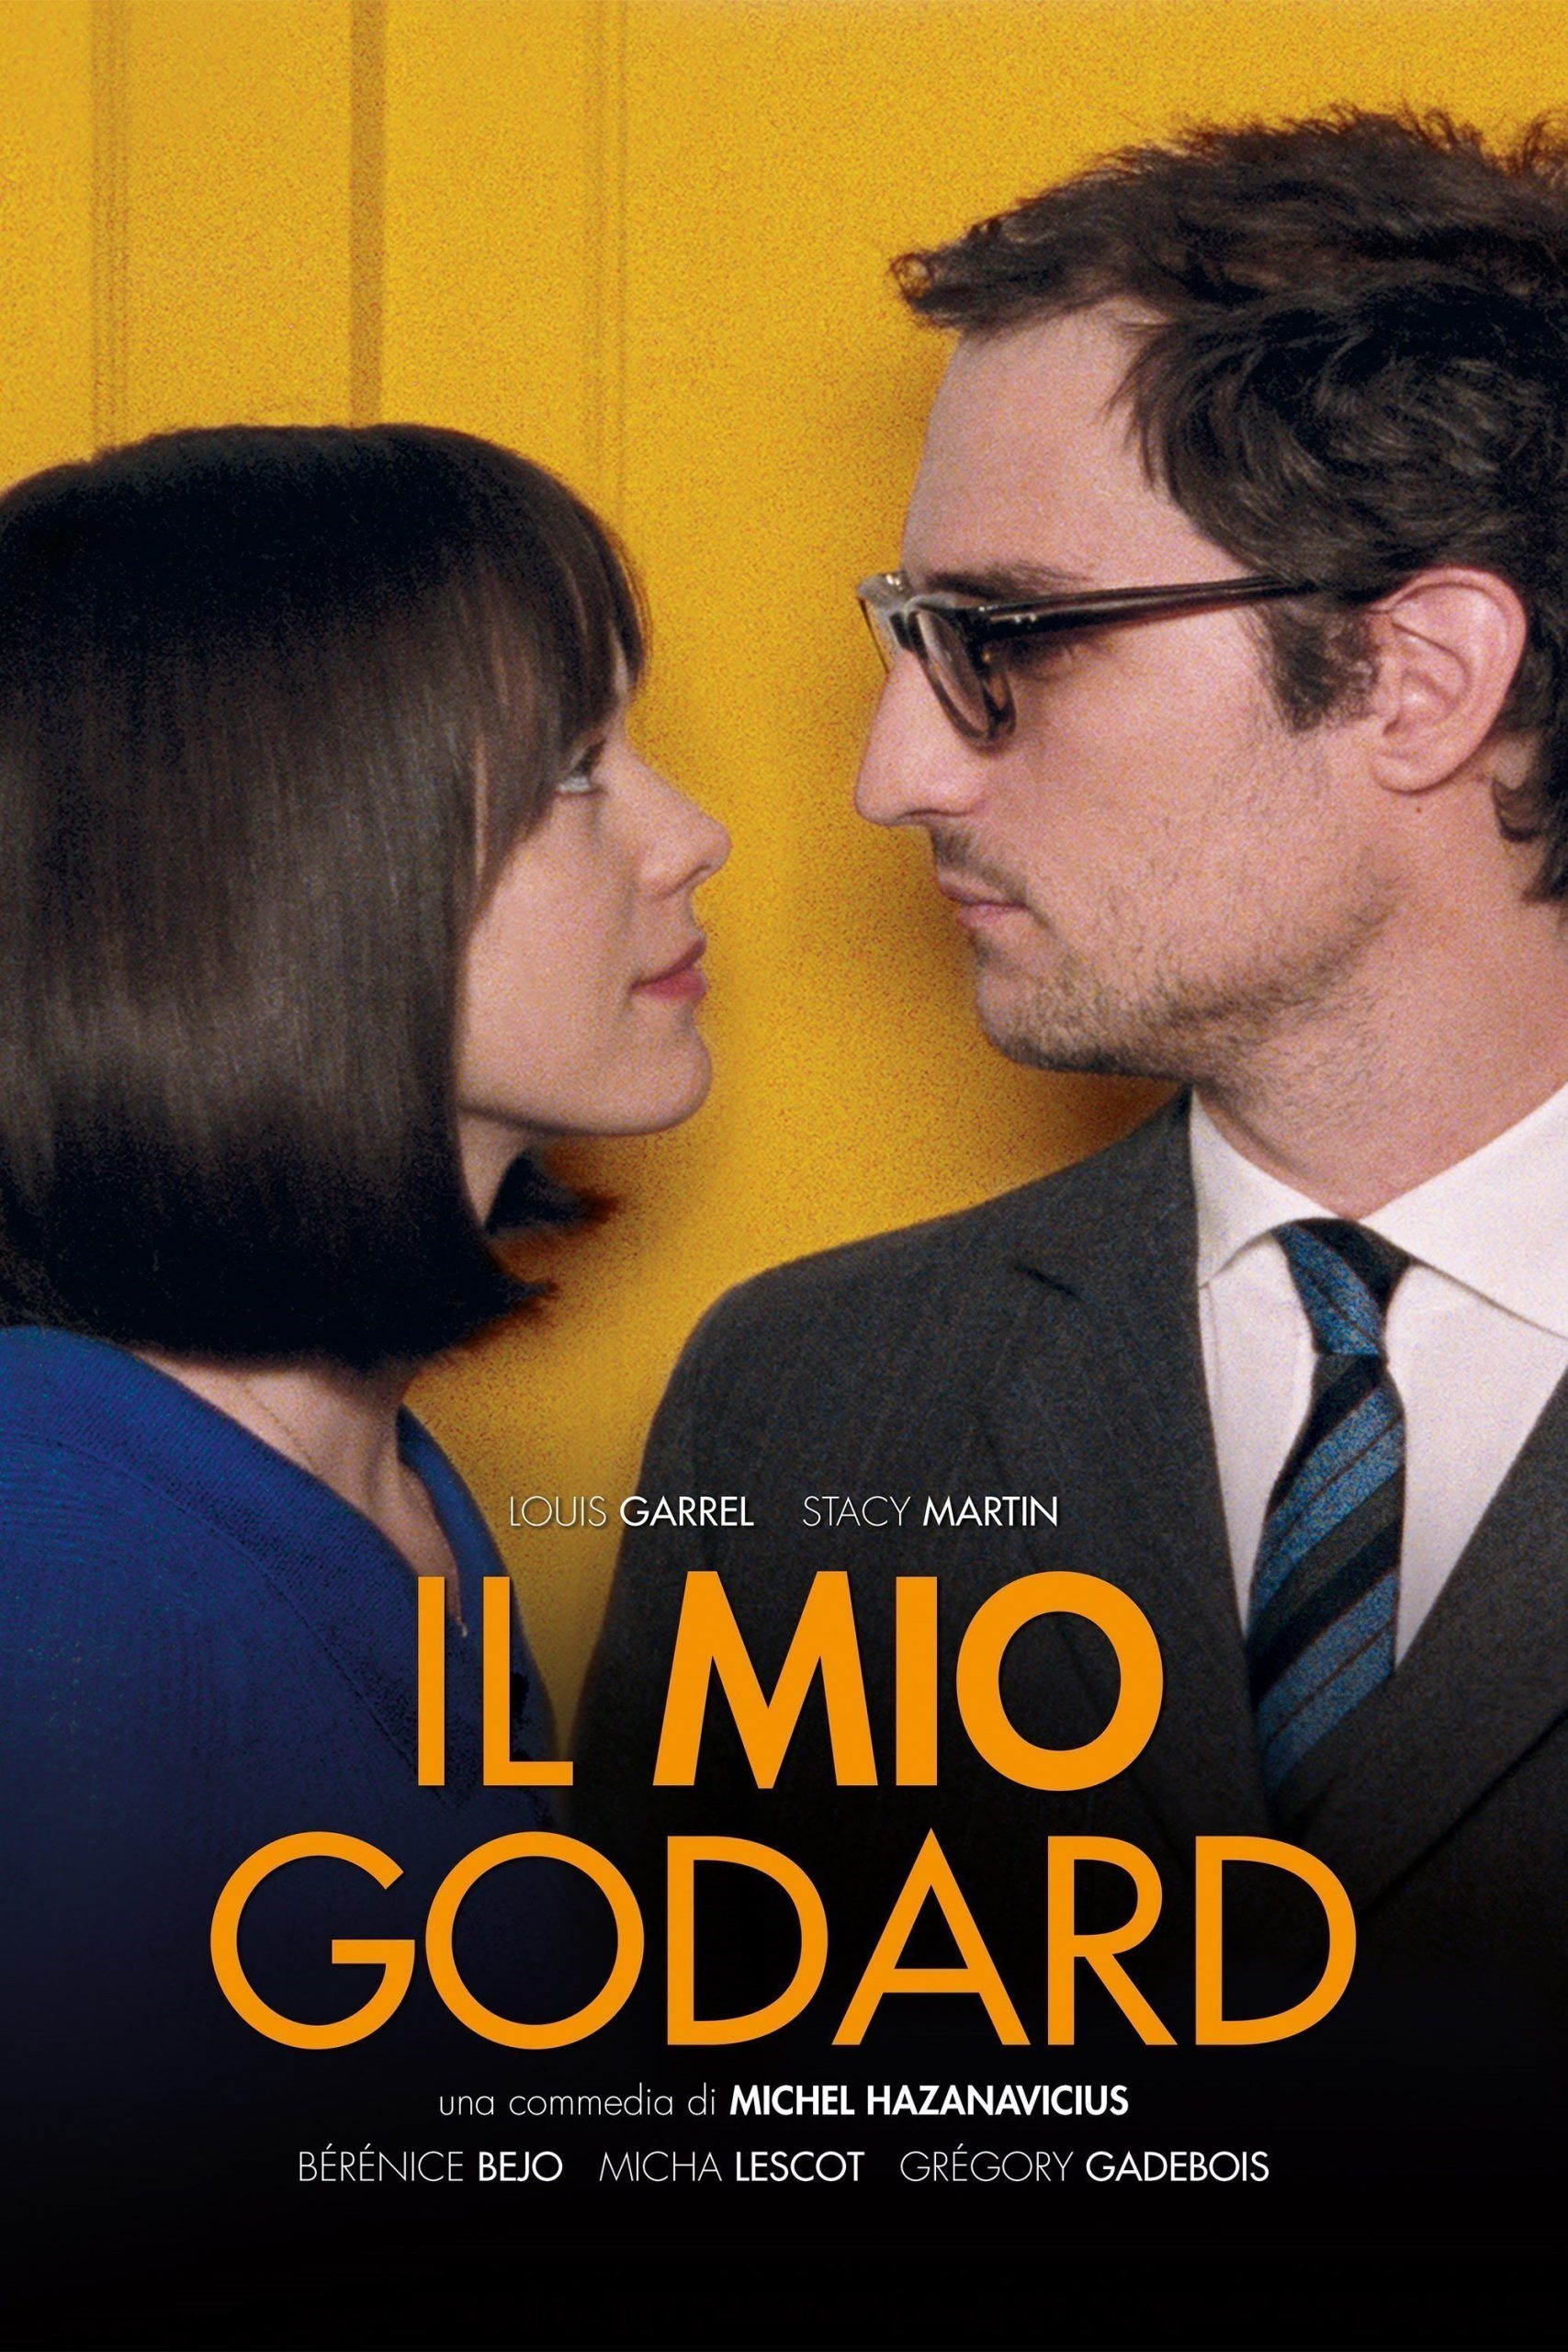 Il mio Godard [HD] (2017)